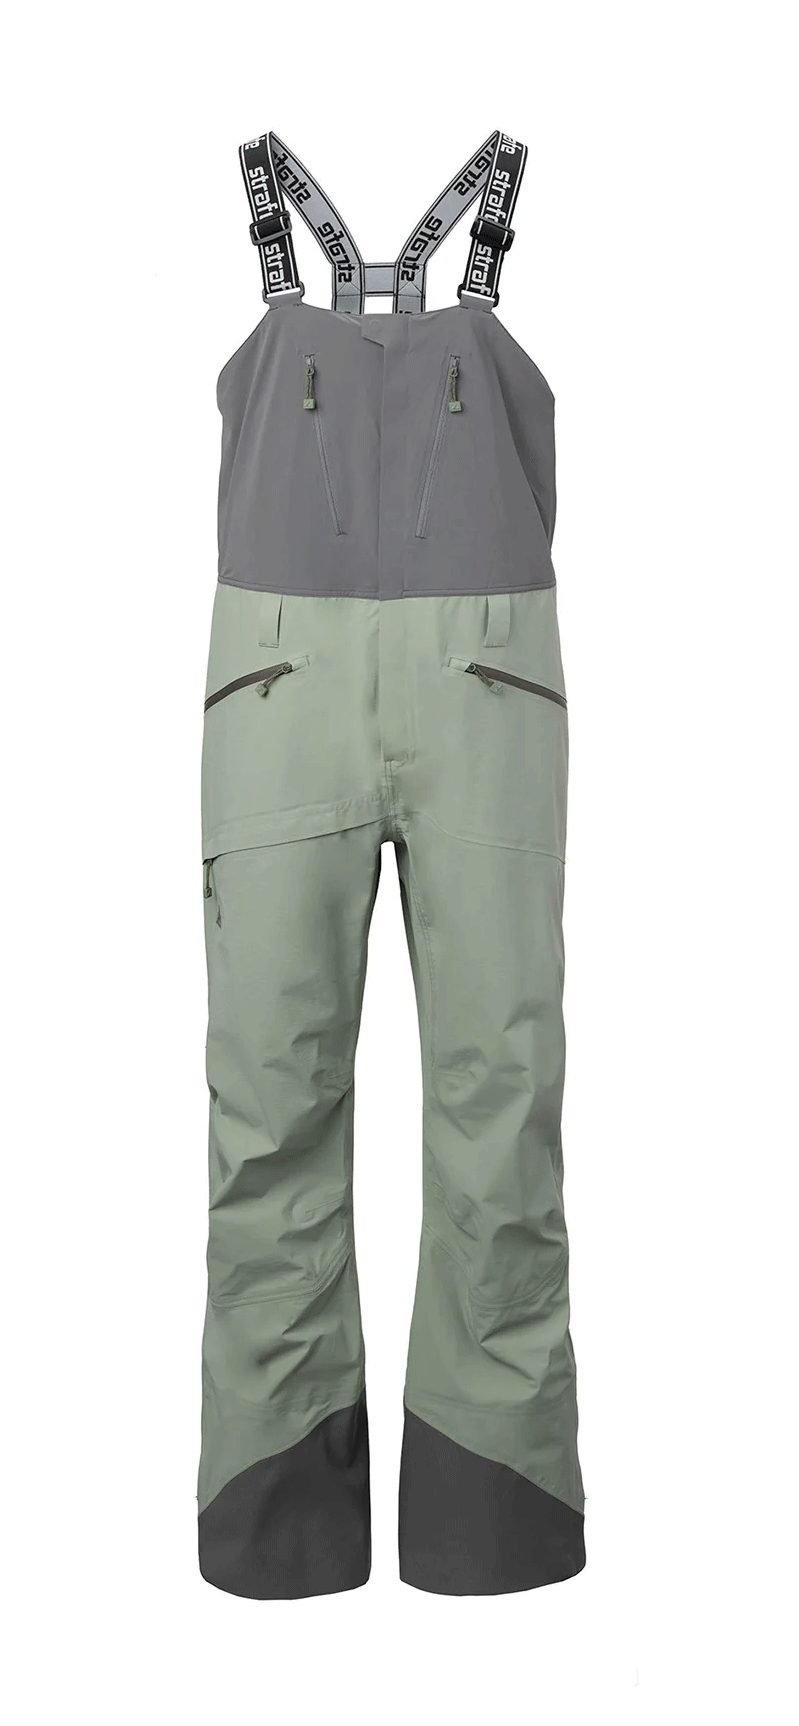 Air Pose Reflective Ski & Snowboard Pants-Women, Yellow XS, All Mountain Waterproof Shell Pants